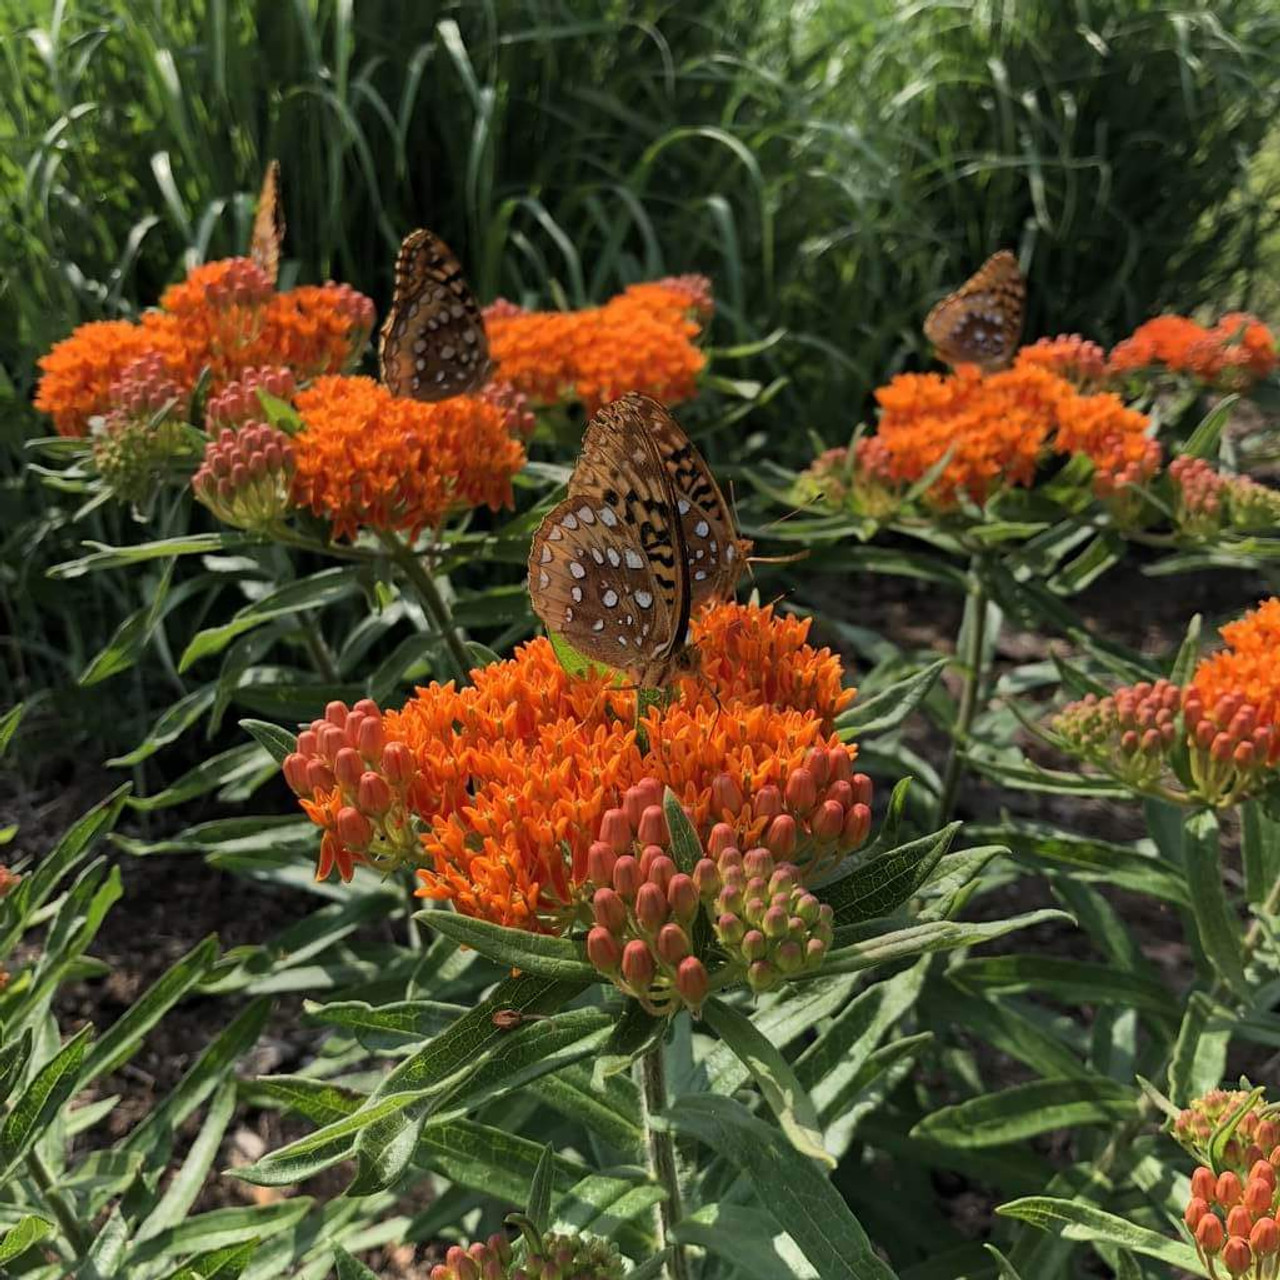 Butterfly Milkweed - Asclepias tuberosa - perennials for monarchs and butterflies